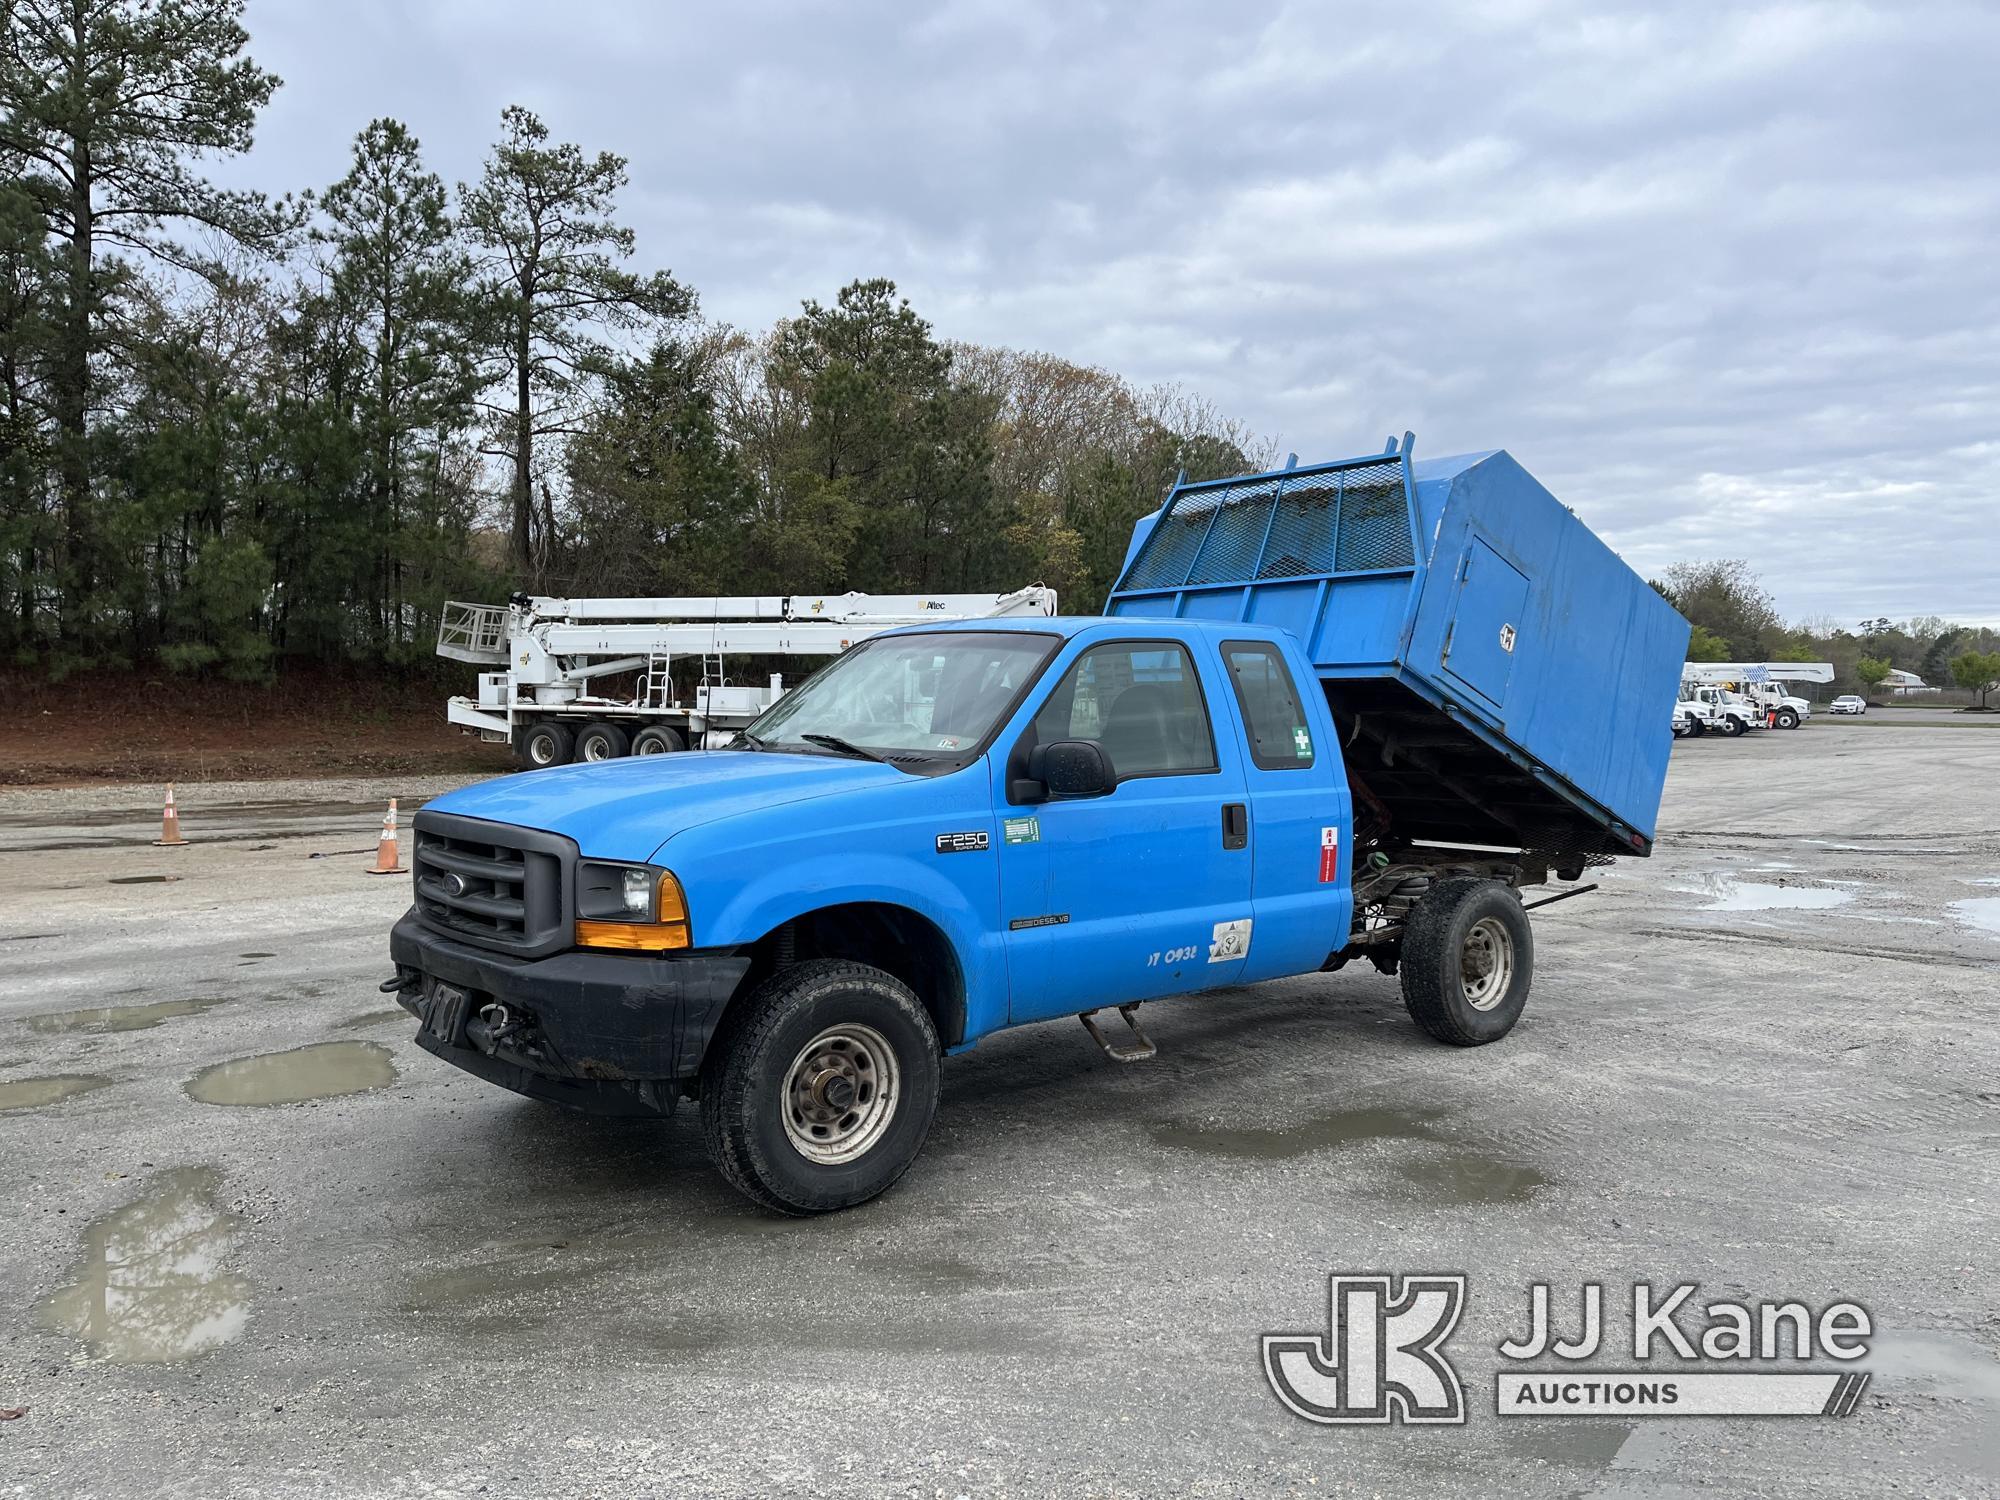 (Chester, VA) 2001 Ford F250 4x4 Extended-Cab Chipper Dump Truck Runs, Moves, & Dump Body Operates